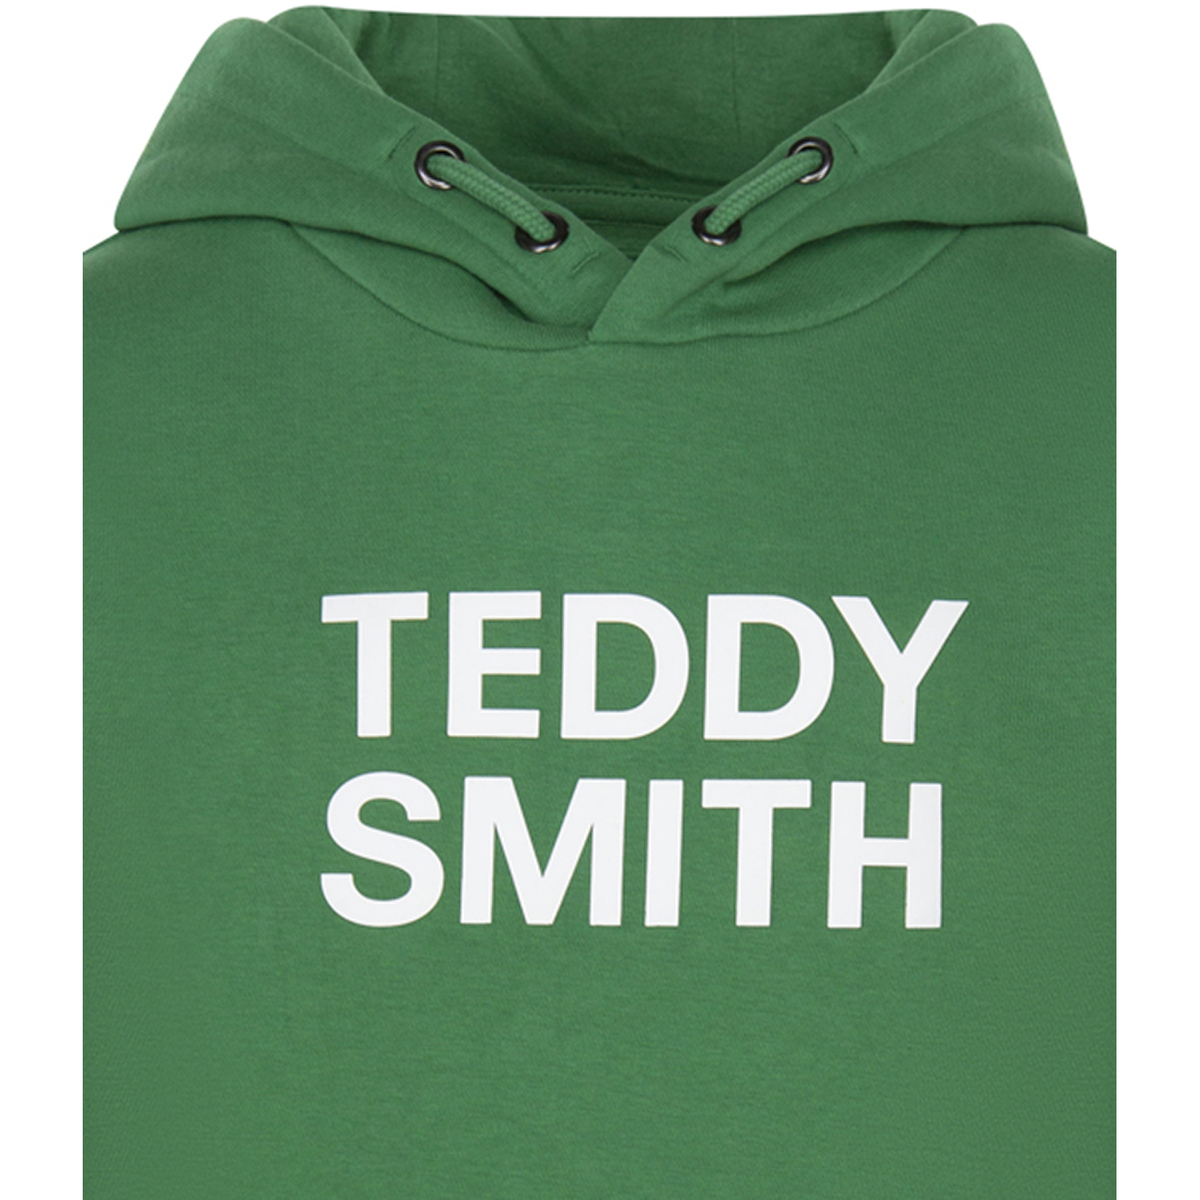 Teddy Smith Vert Sweat coton à capuche pueuIhUo